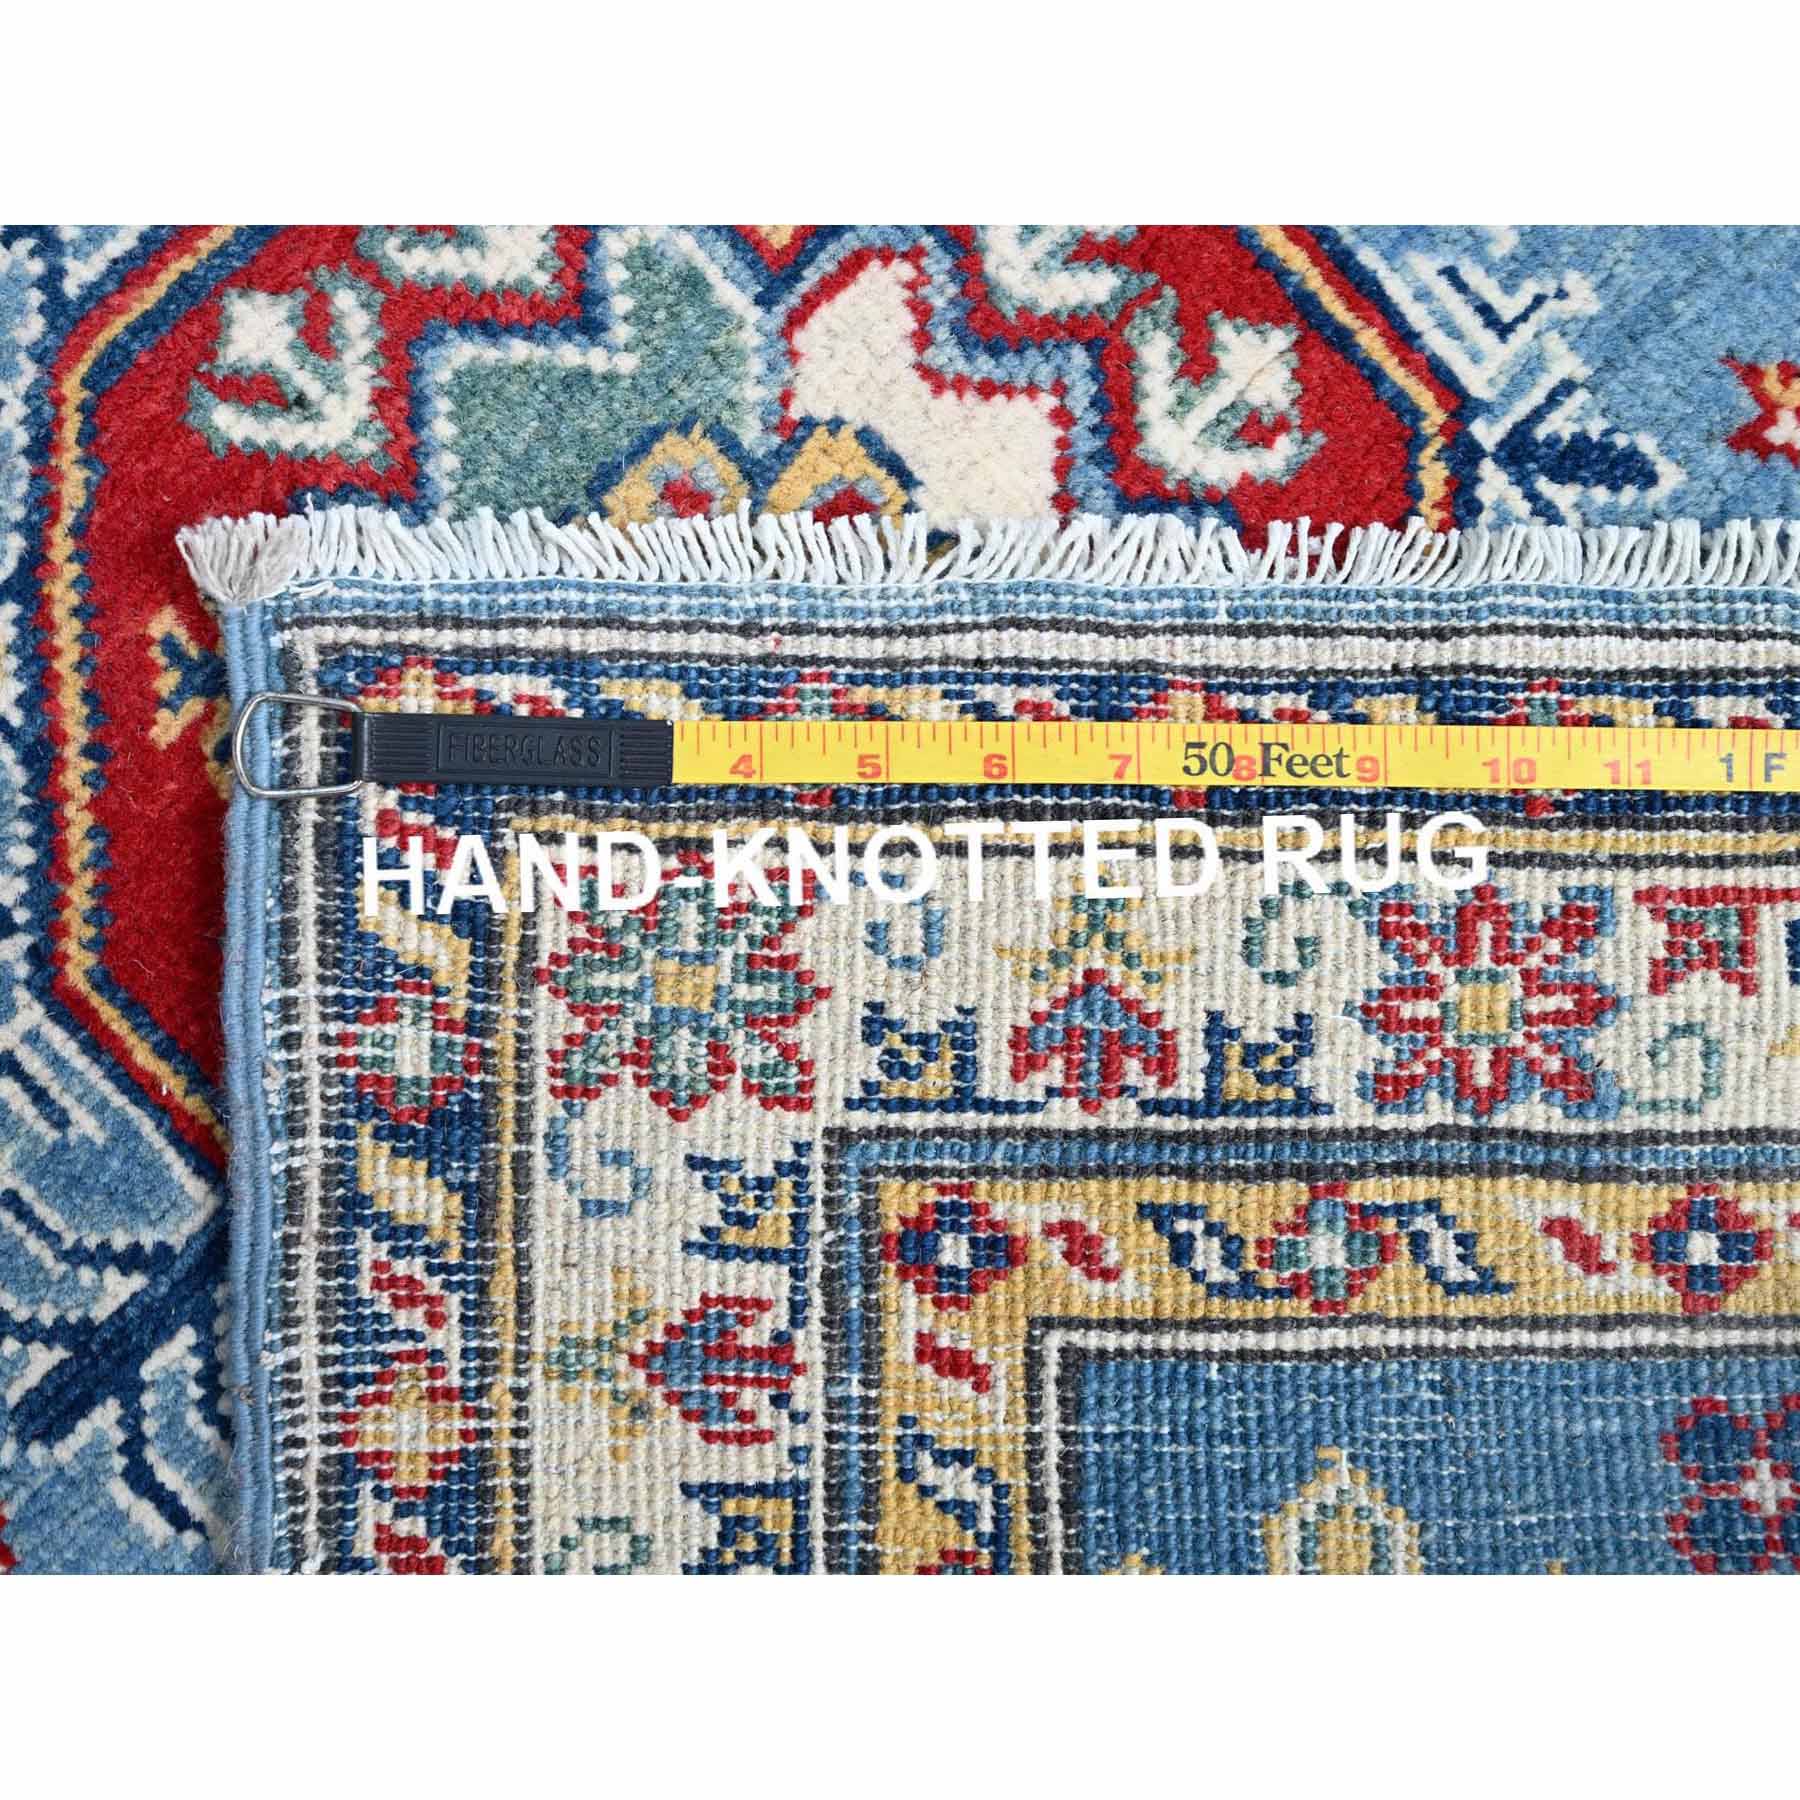 Kazak-Hand-Knotted-Rug-434275